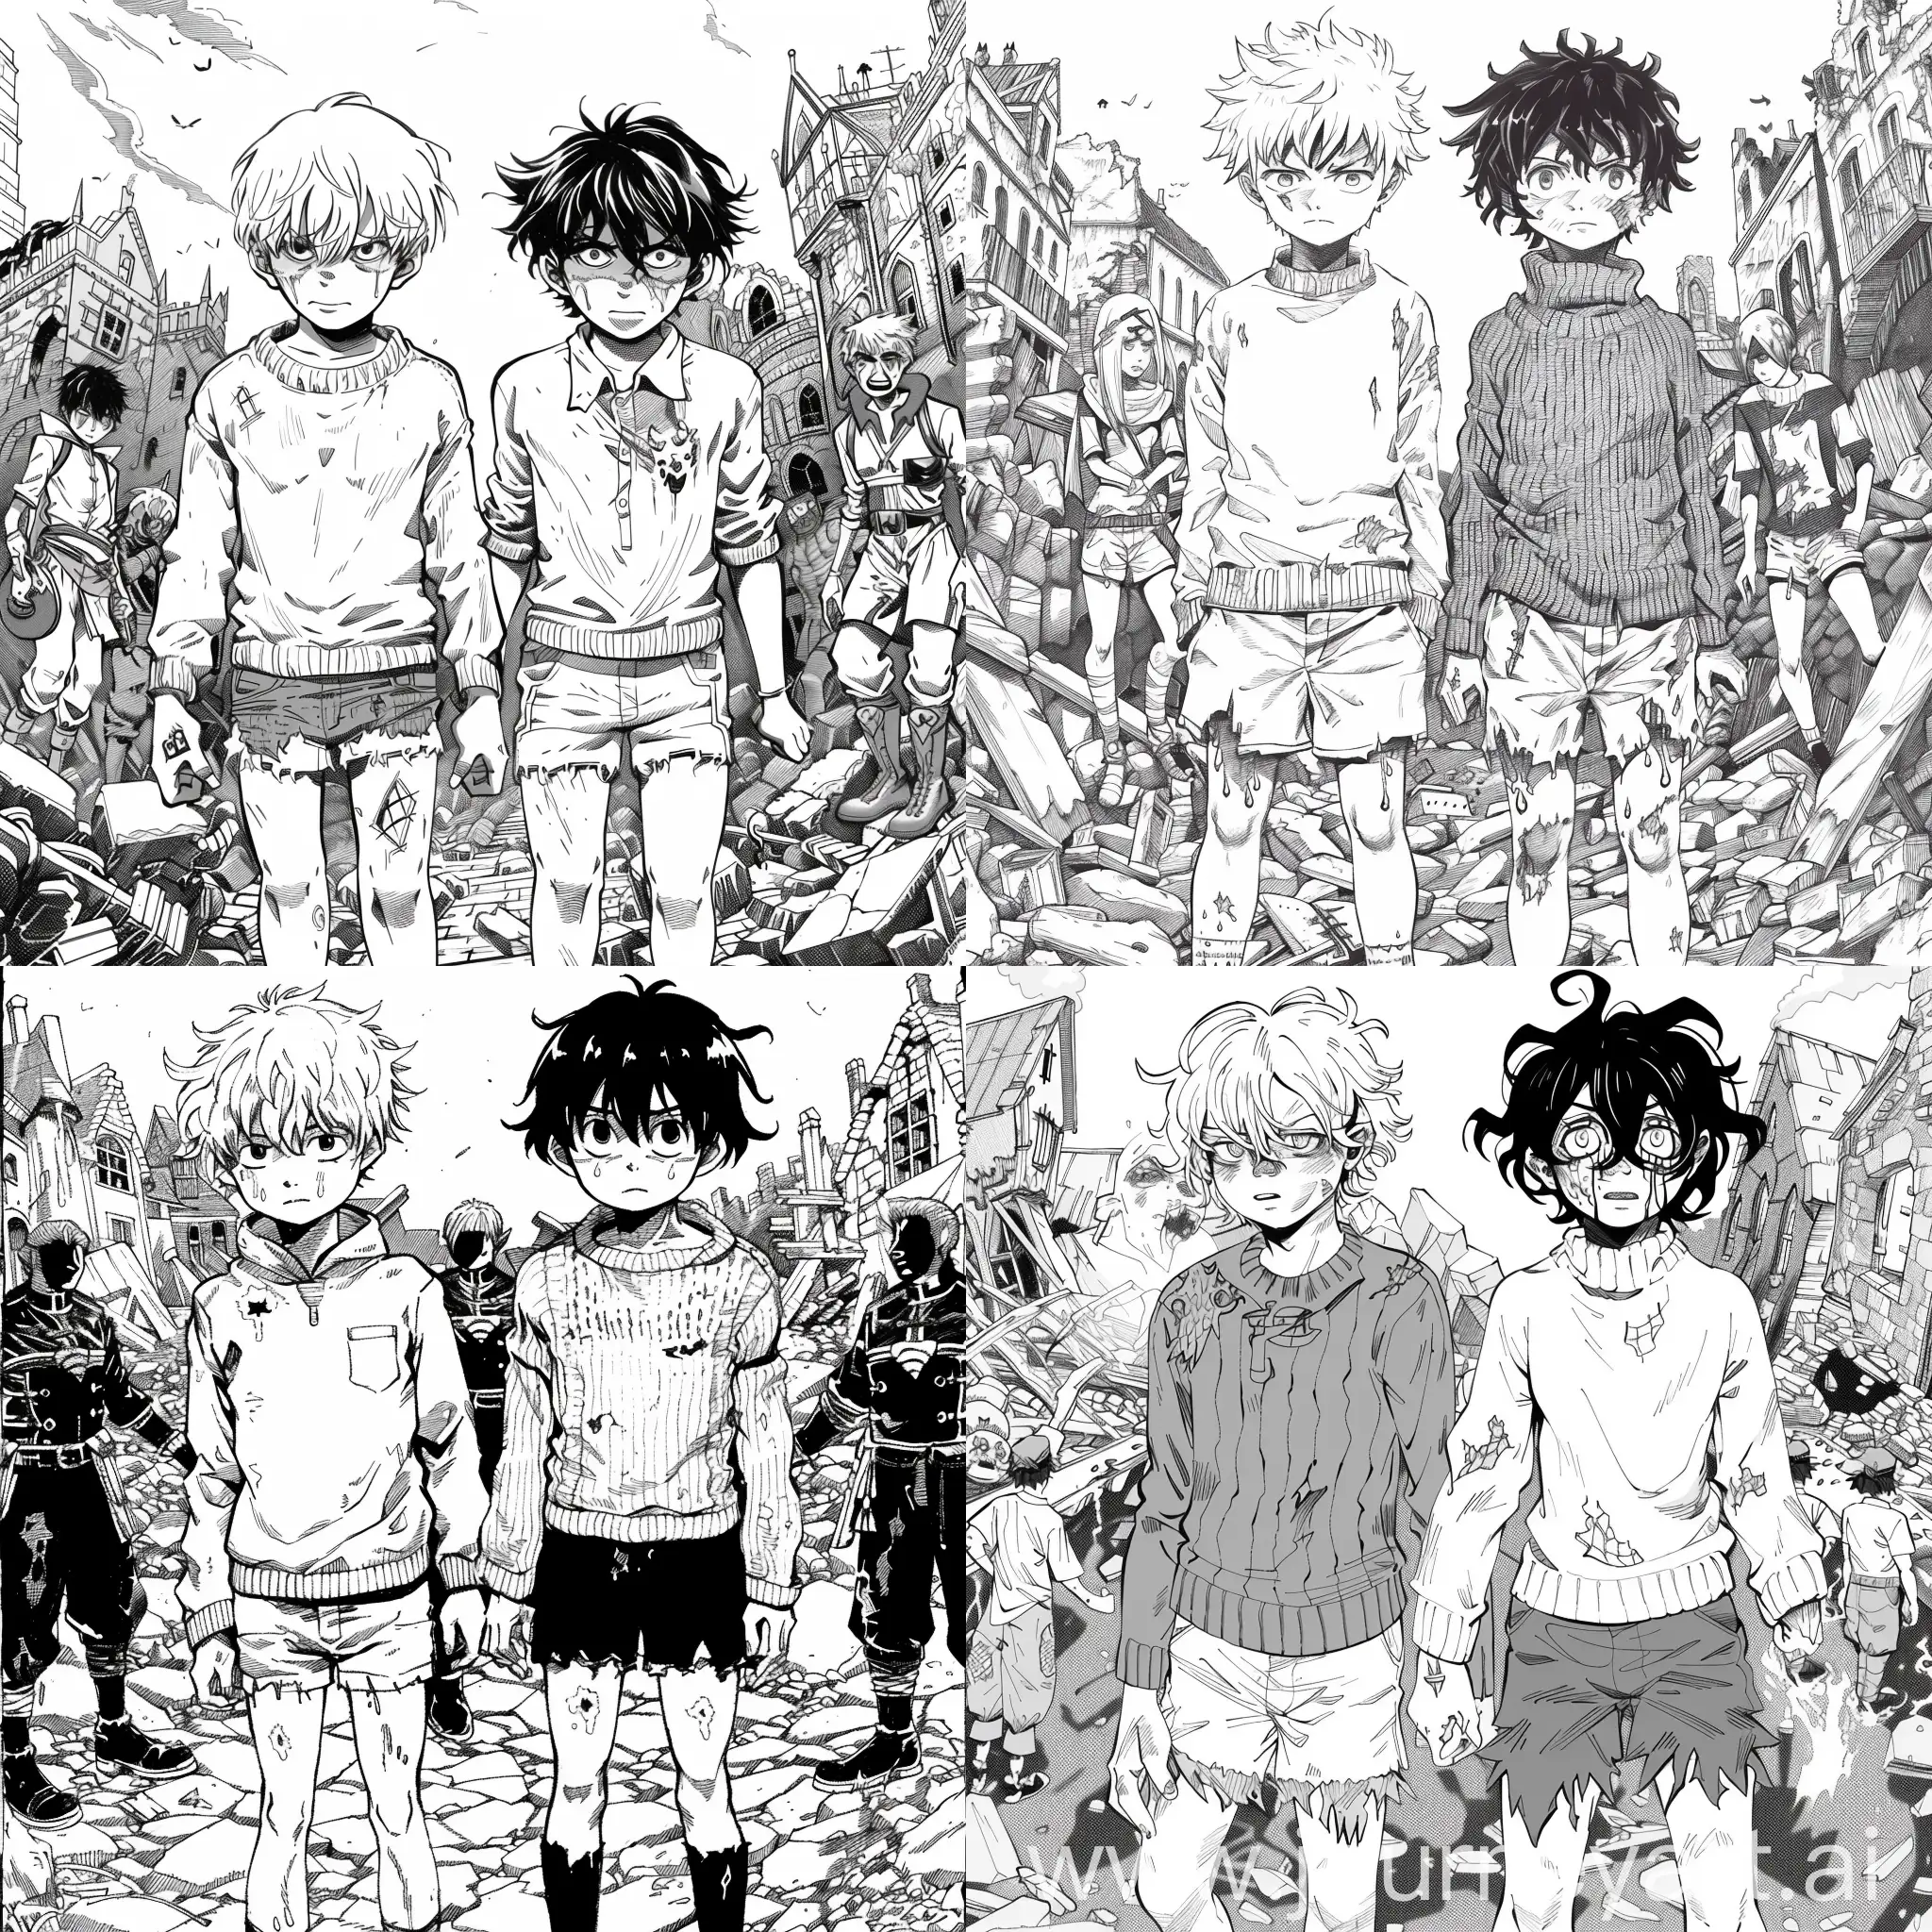 Adventurous-Teens-Amidst-Ruins-Emotional-Encounter-in-Manga-Style